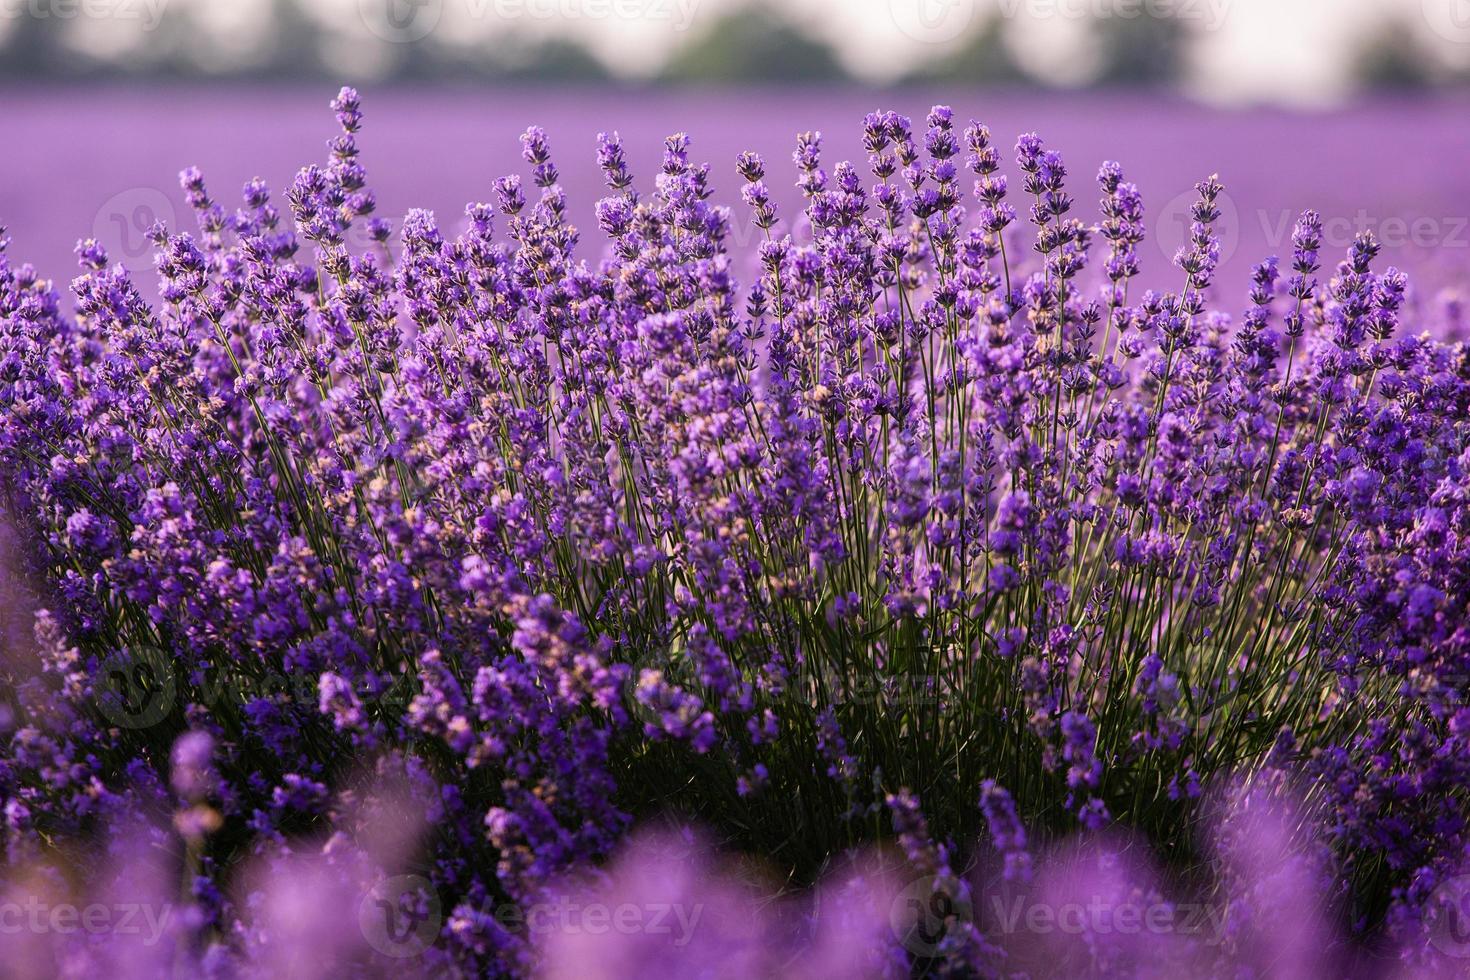 hermoso campo de lavanda al amanecer. fondo de flor morada. flor violeta plantas aromáticas. foto